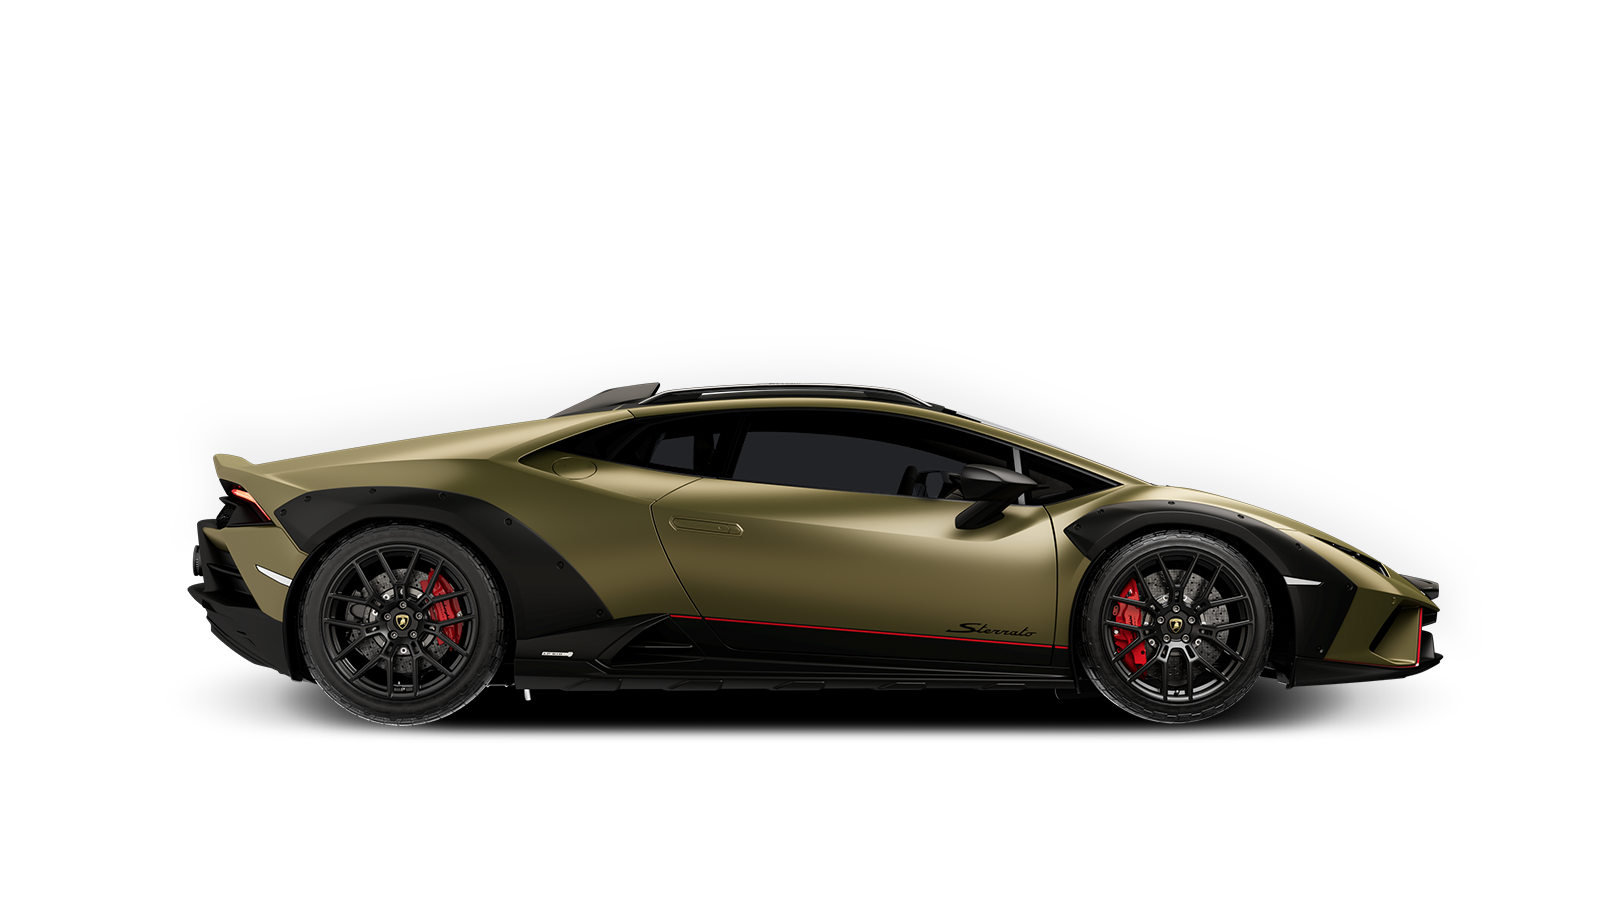 De kerk Maak avondeten af hebben Automobili Lamborghini - Official Website | Lamborghini.com